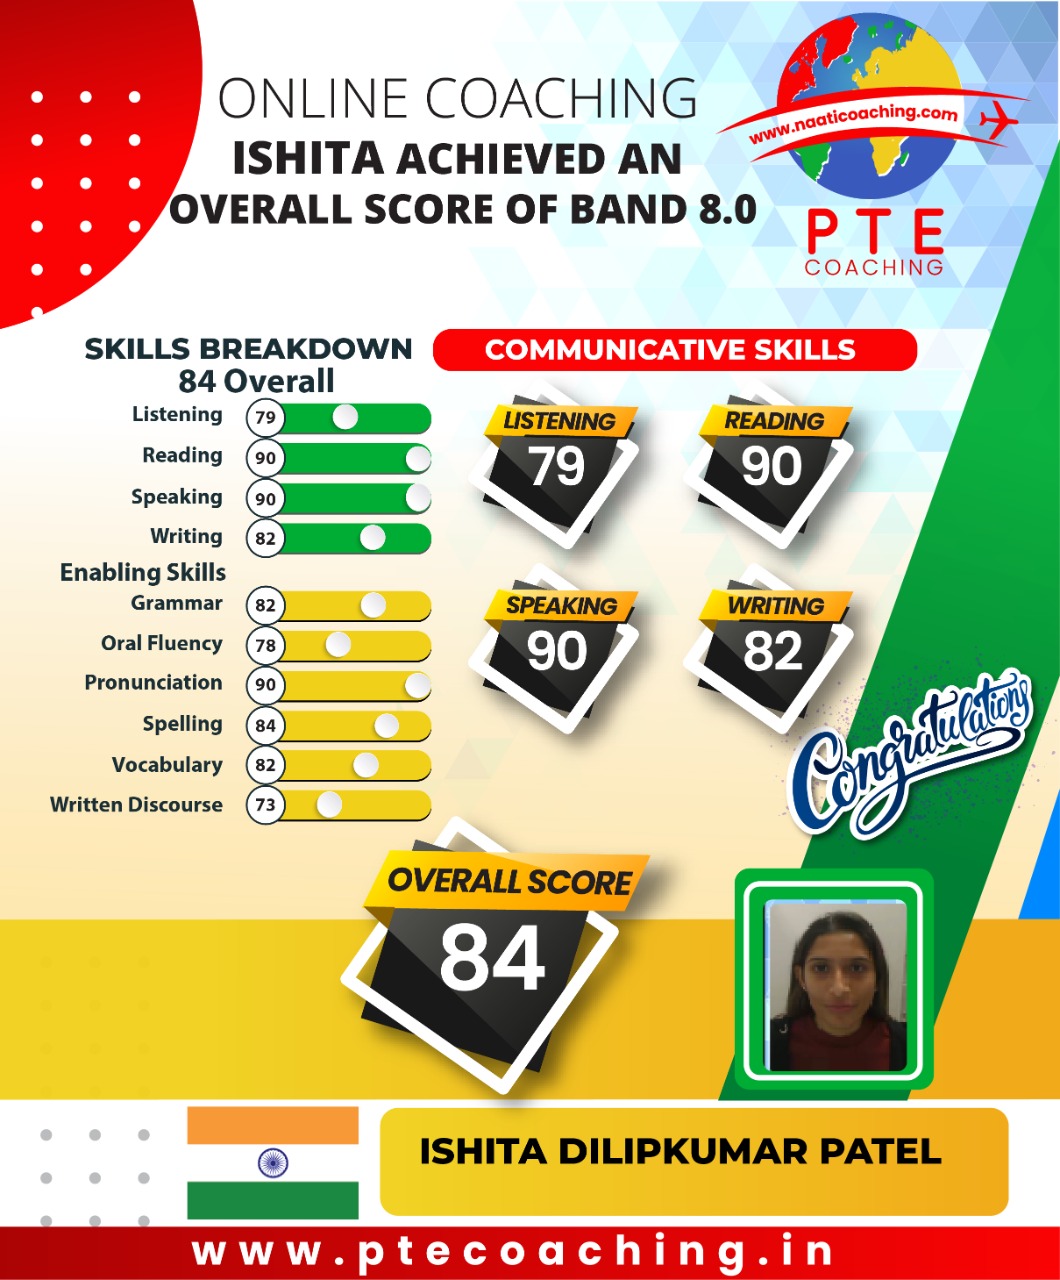 PTE Coaching Scorecard - Ishita achieved an overall score band 8.0